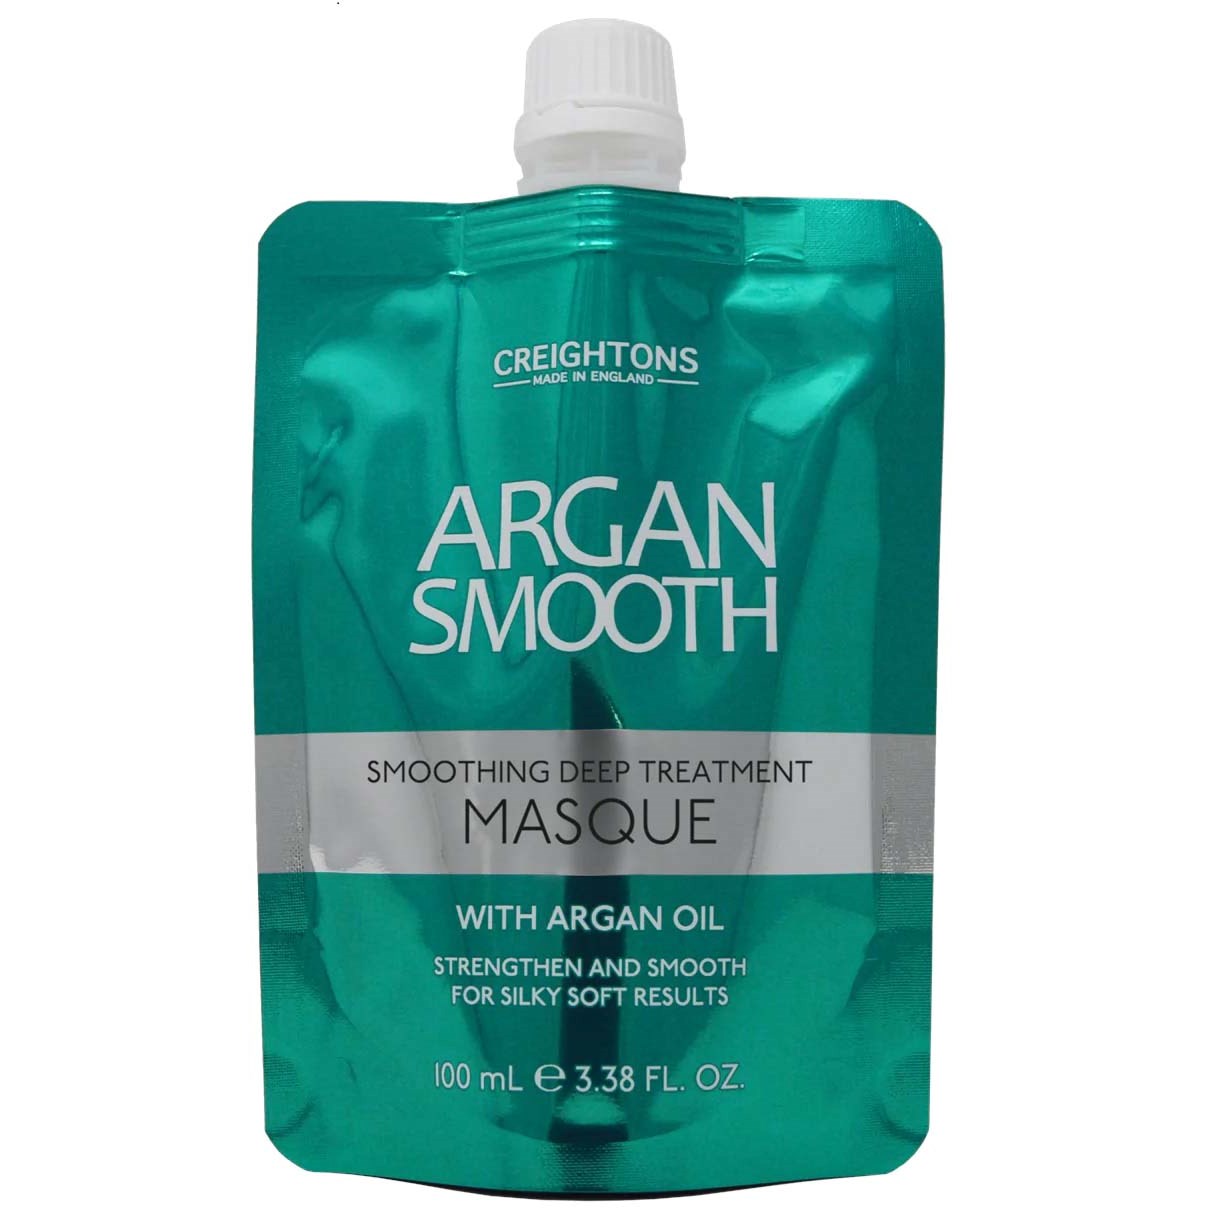 Creightons Argan Smooth Smoothing Deep Treatment Masque 100 ml